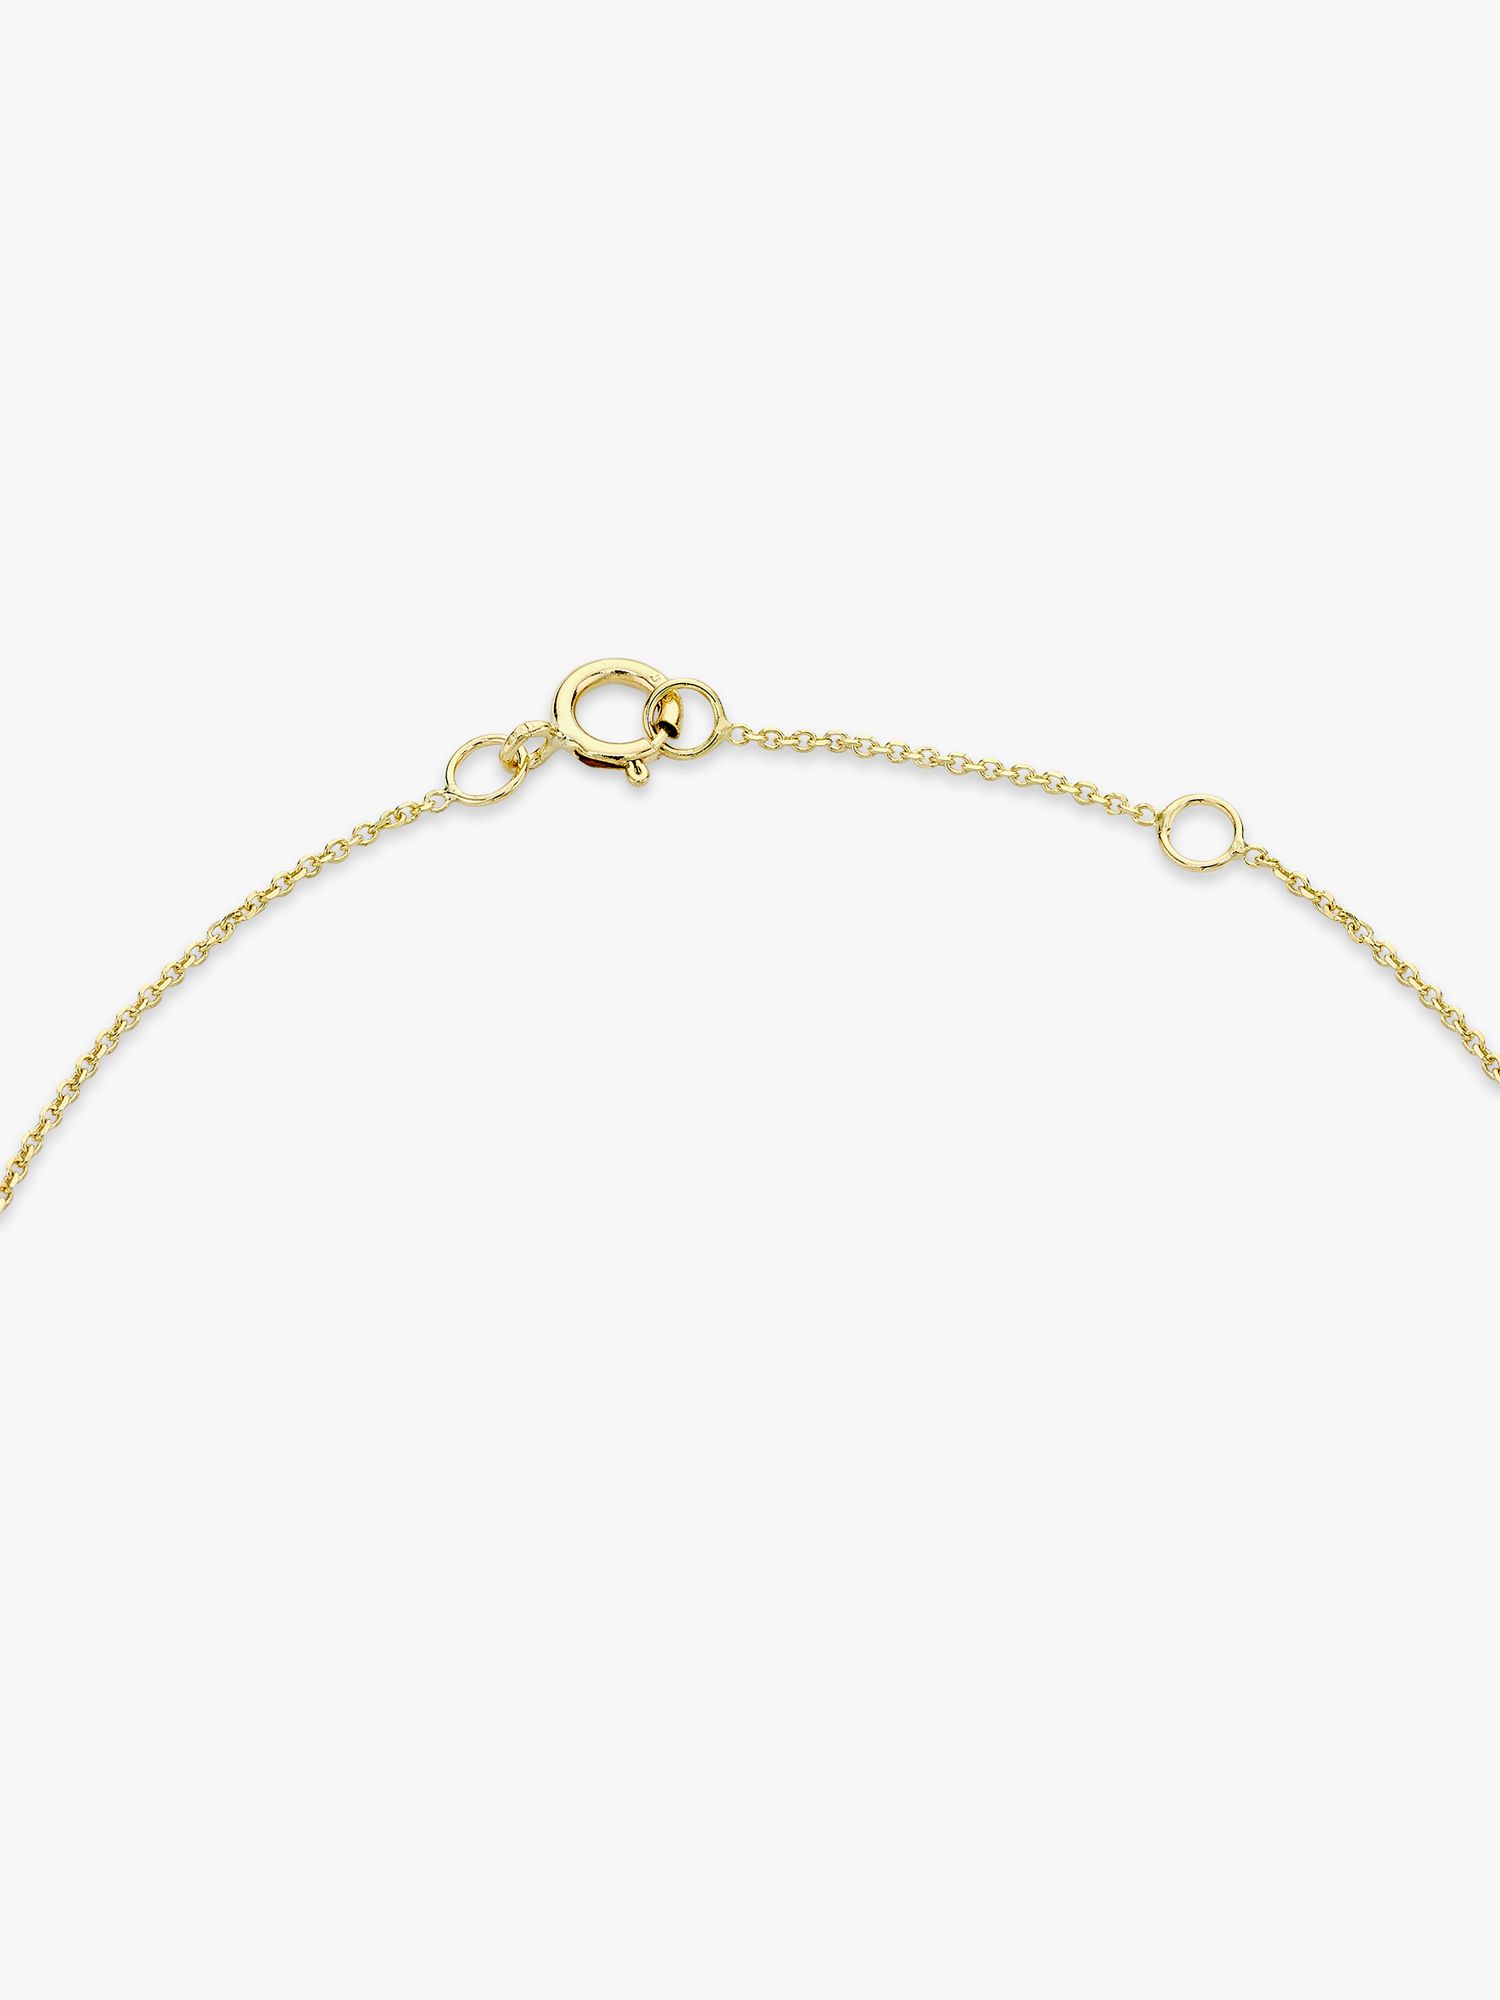 Buy IBB 9ct Yellow Gold Initial Bracelet Online at johnlewis.com